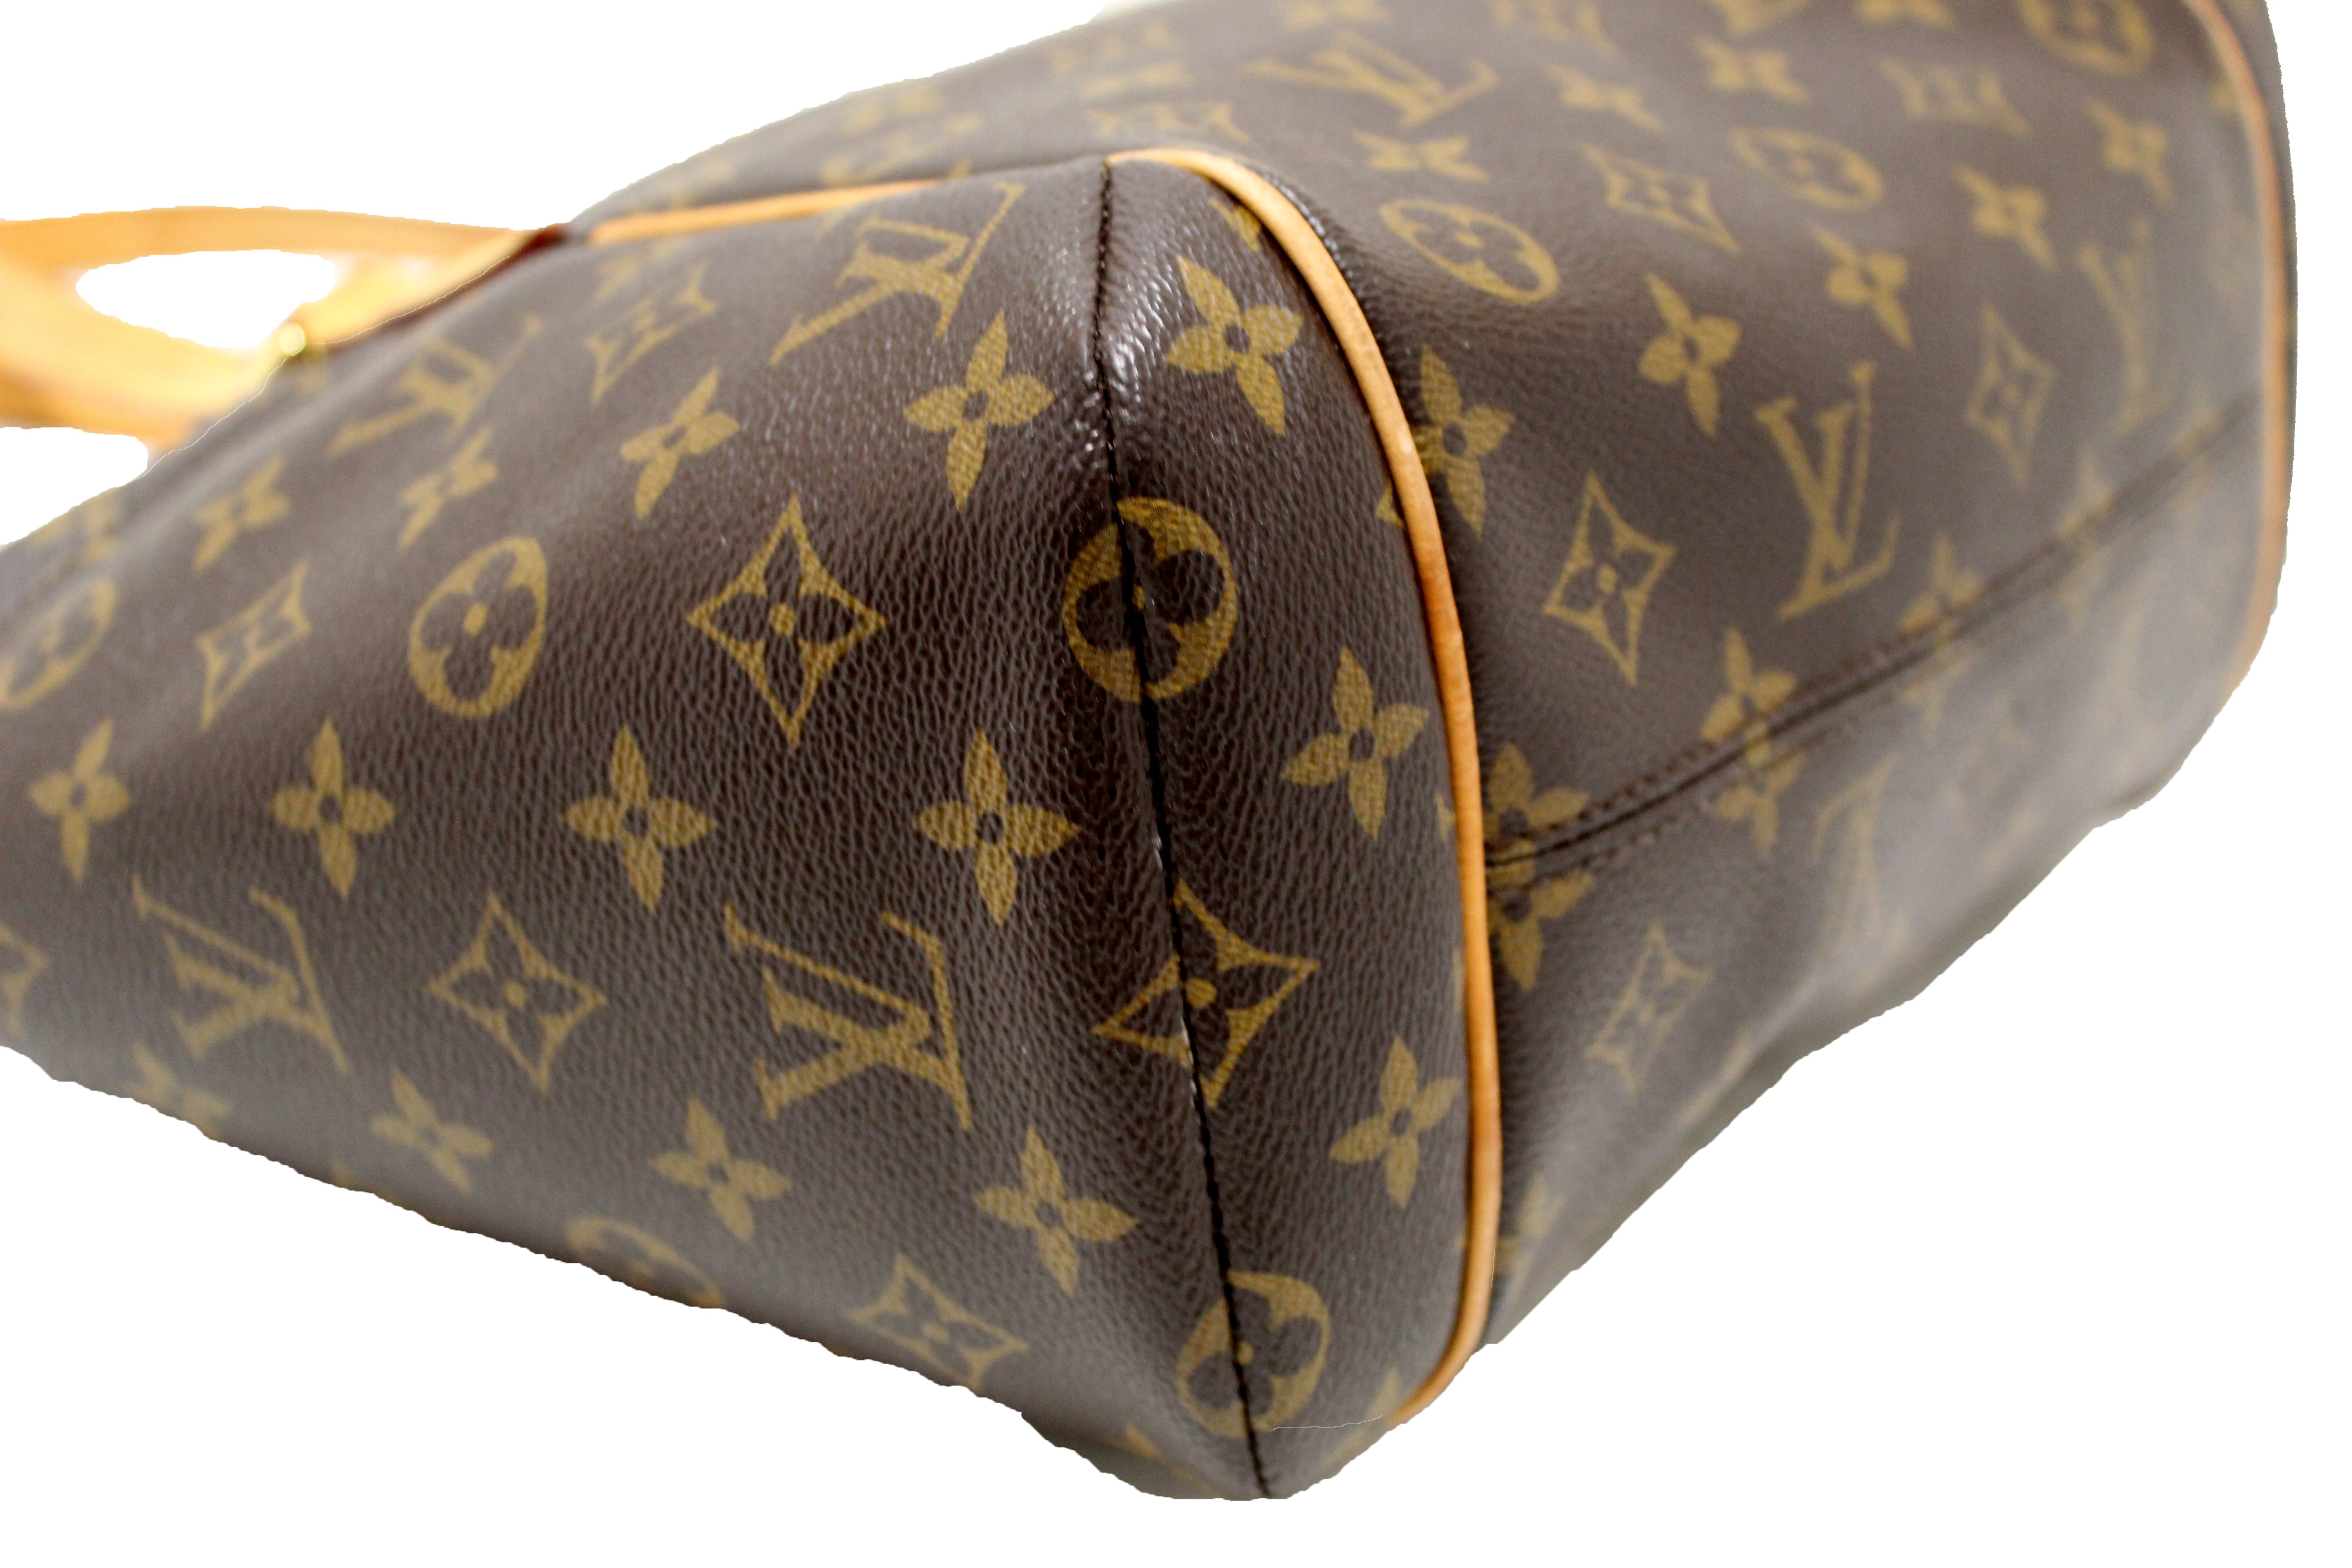 Authentic Louis Vuitton Monogram Totally PM Shoulder Tote Bag